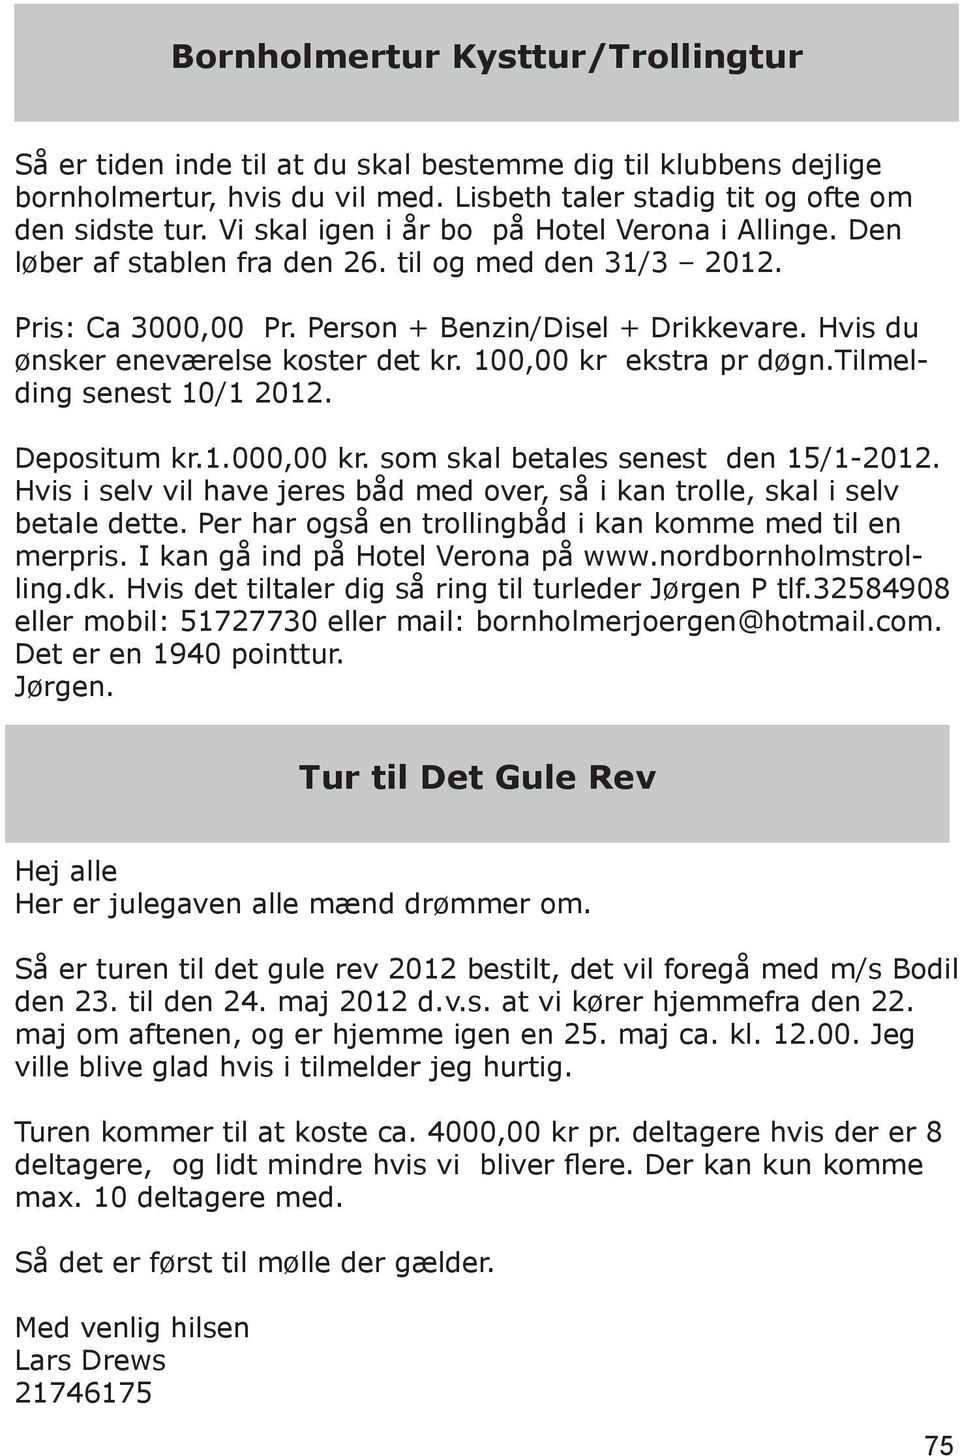 Hvis du ønsker eneværelse koster det kr. 100,00 kr ekstra pr døgn.tilmelding senest 10/1 2012. Depositum kr.1.000,00 kr. som skal betales senest den 15/1-2012.